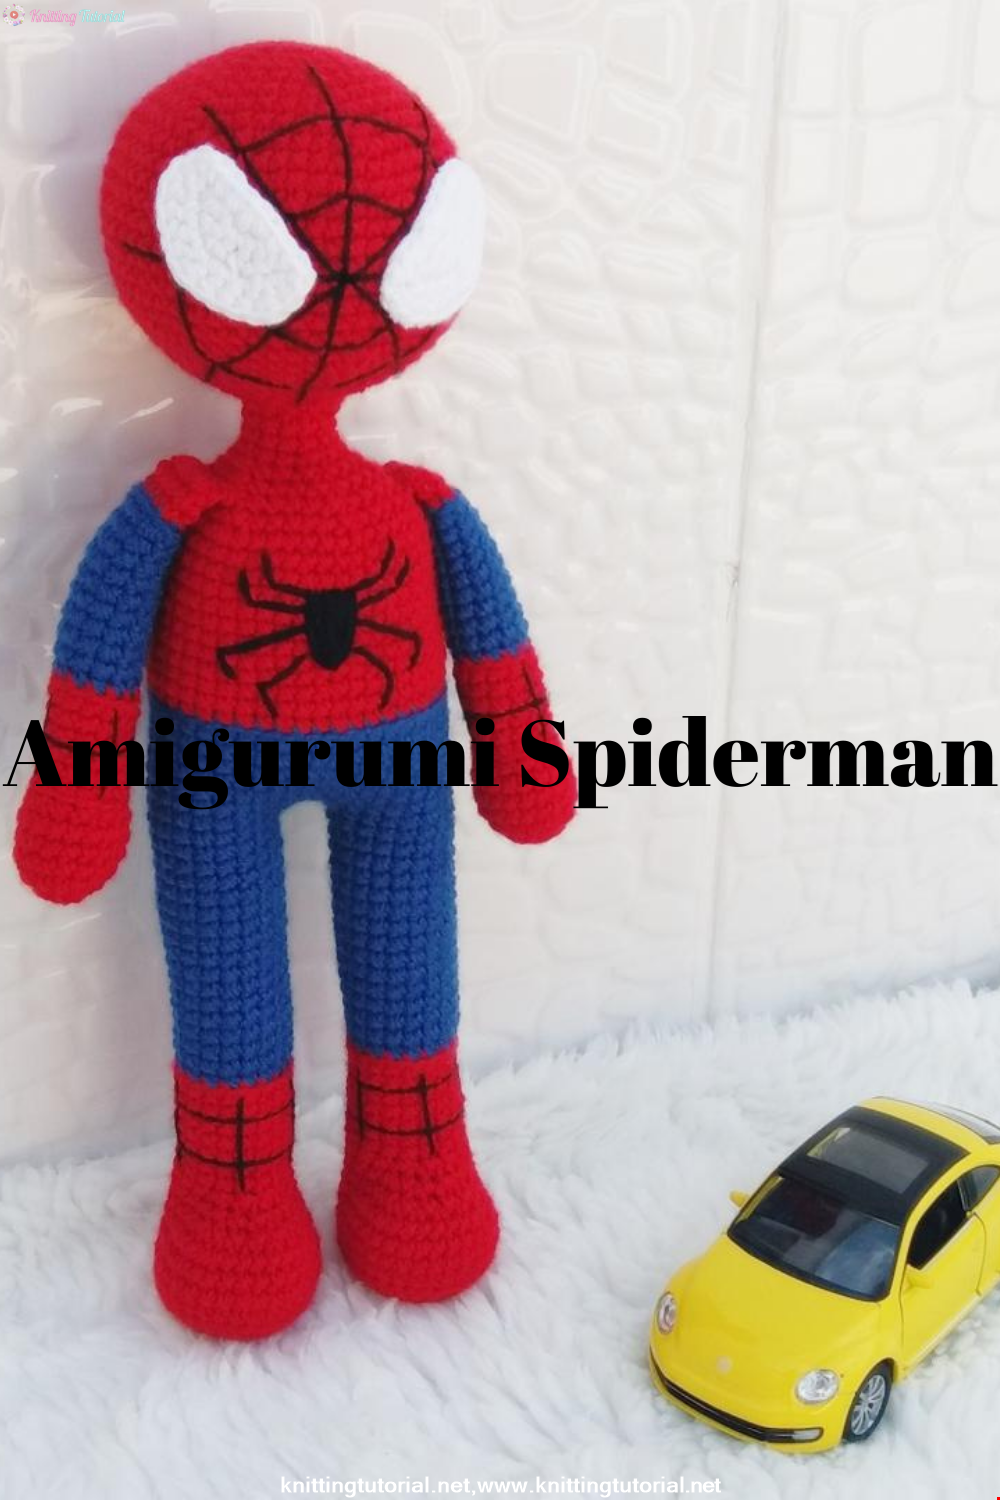 Making Amigurumi Spiderman